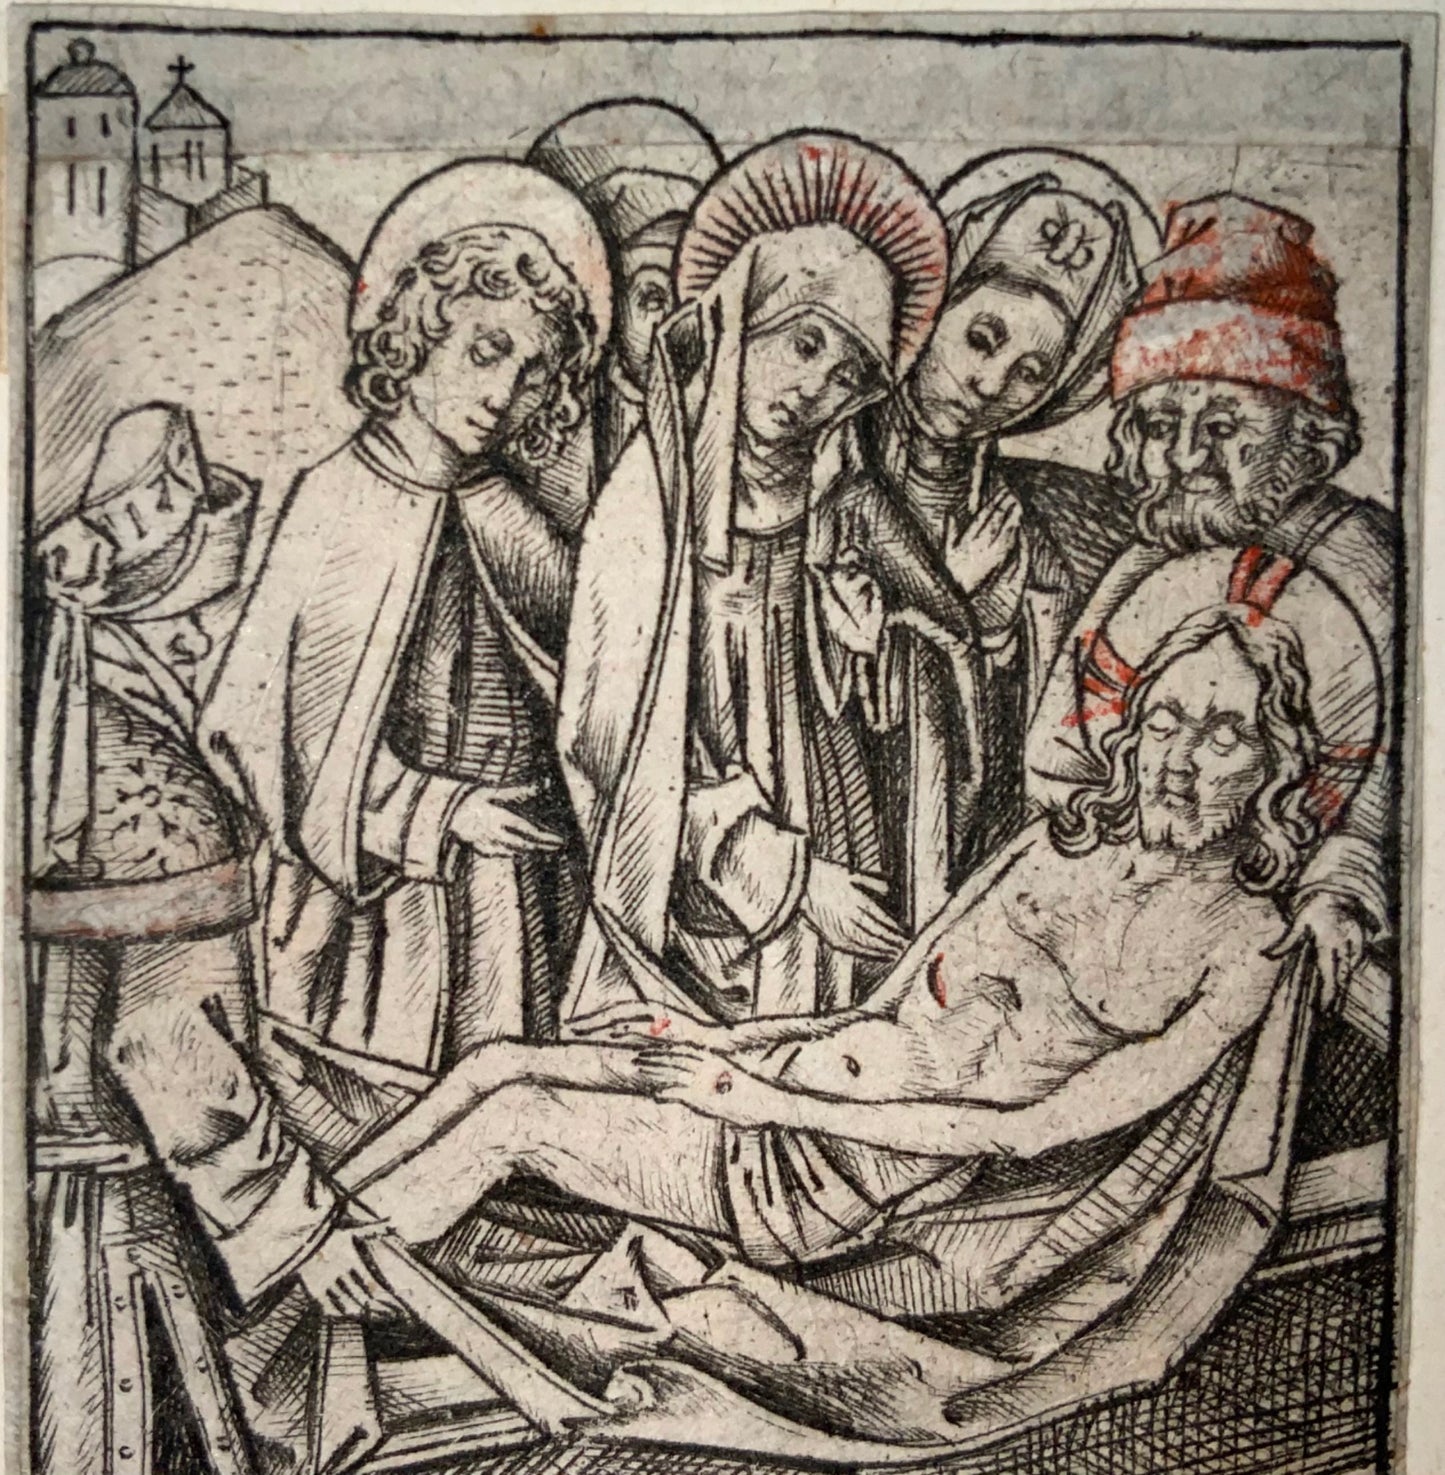 1460 c Israhel van Meckenem, Burial of Christ, metalcut, mid-15th Century, religious art